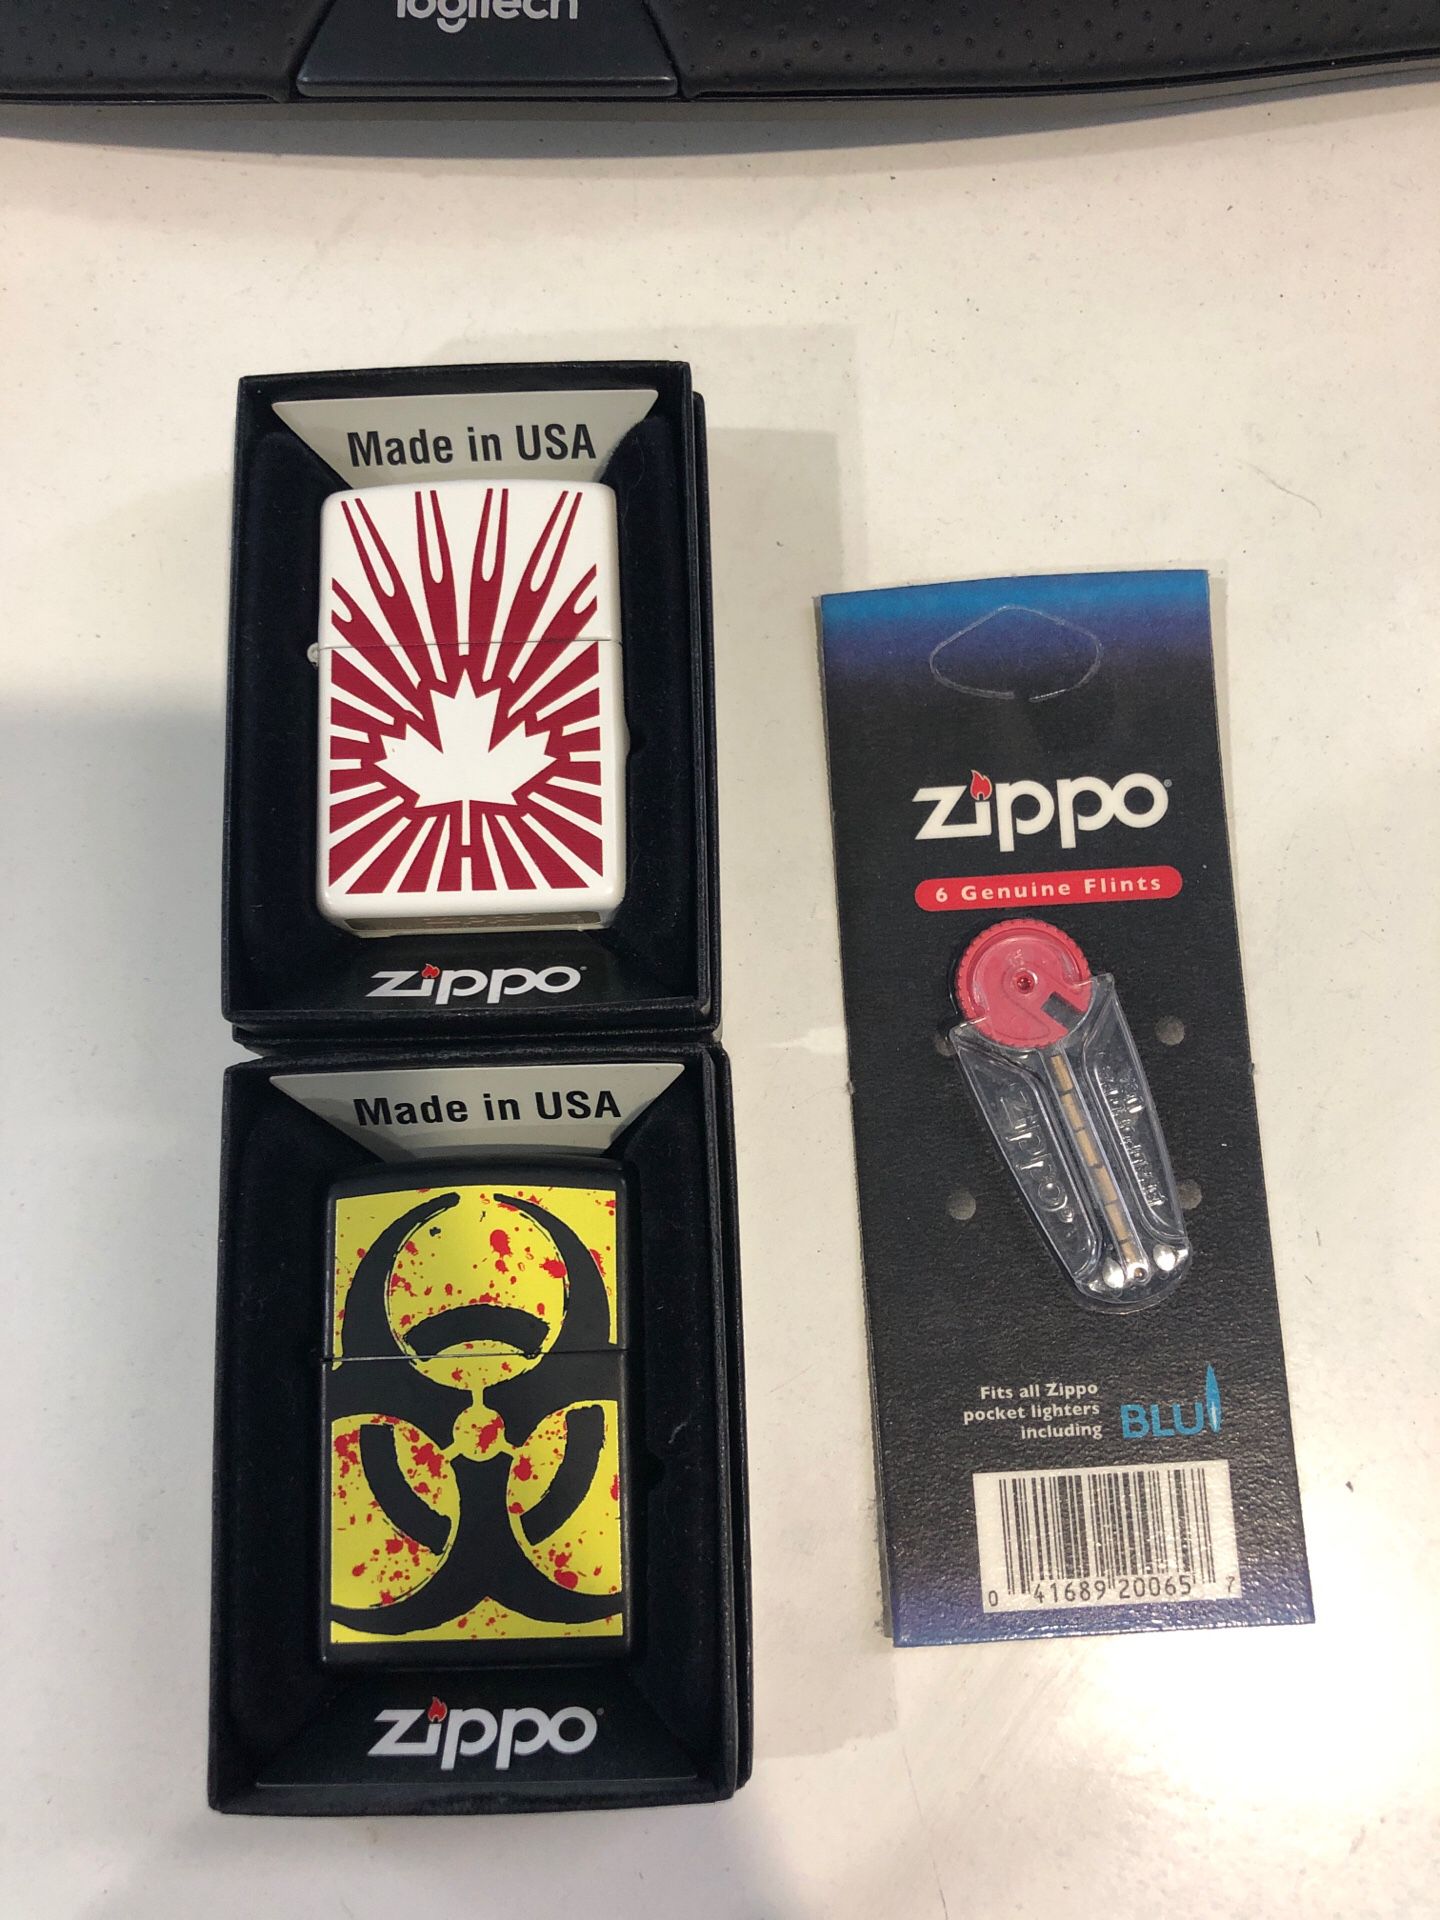 2 Zippo lighters slightly used